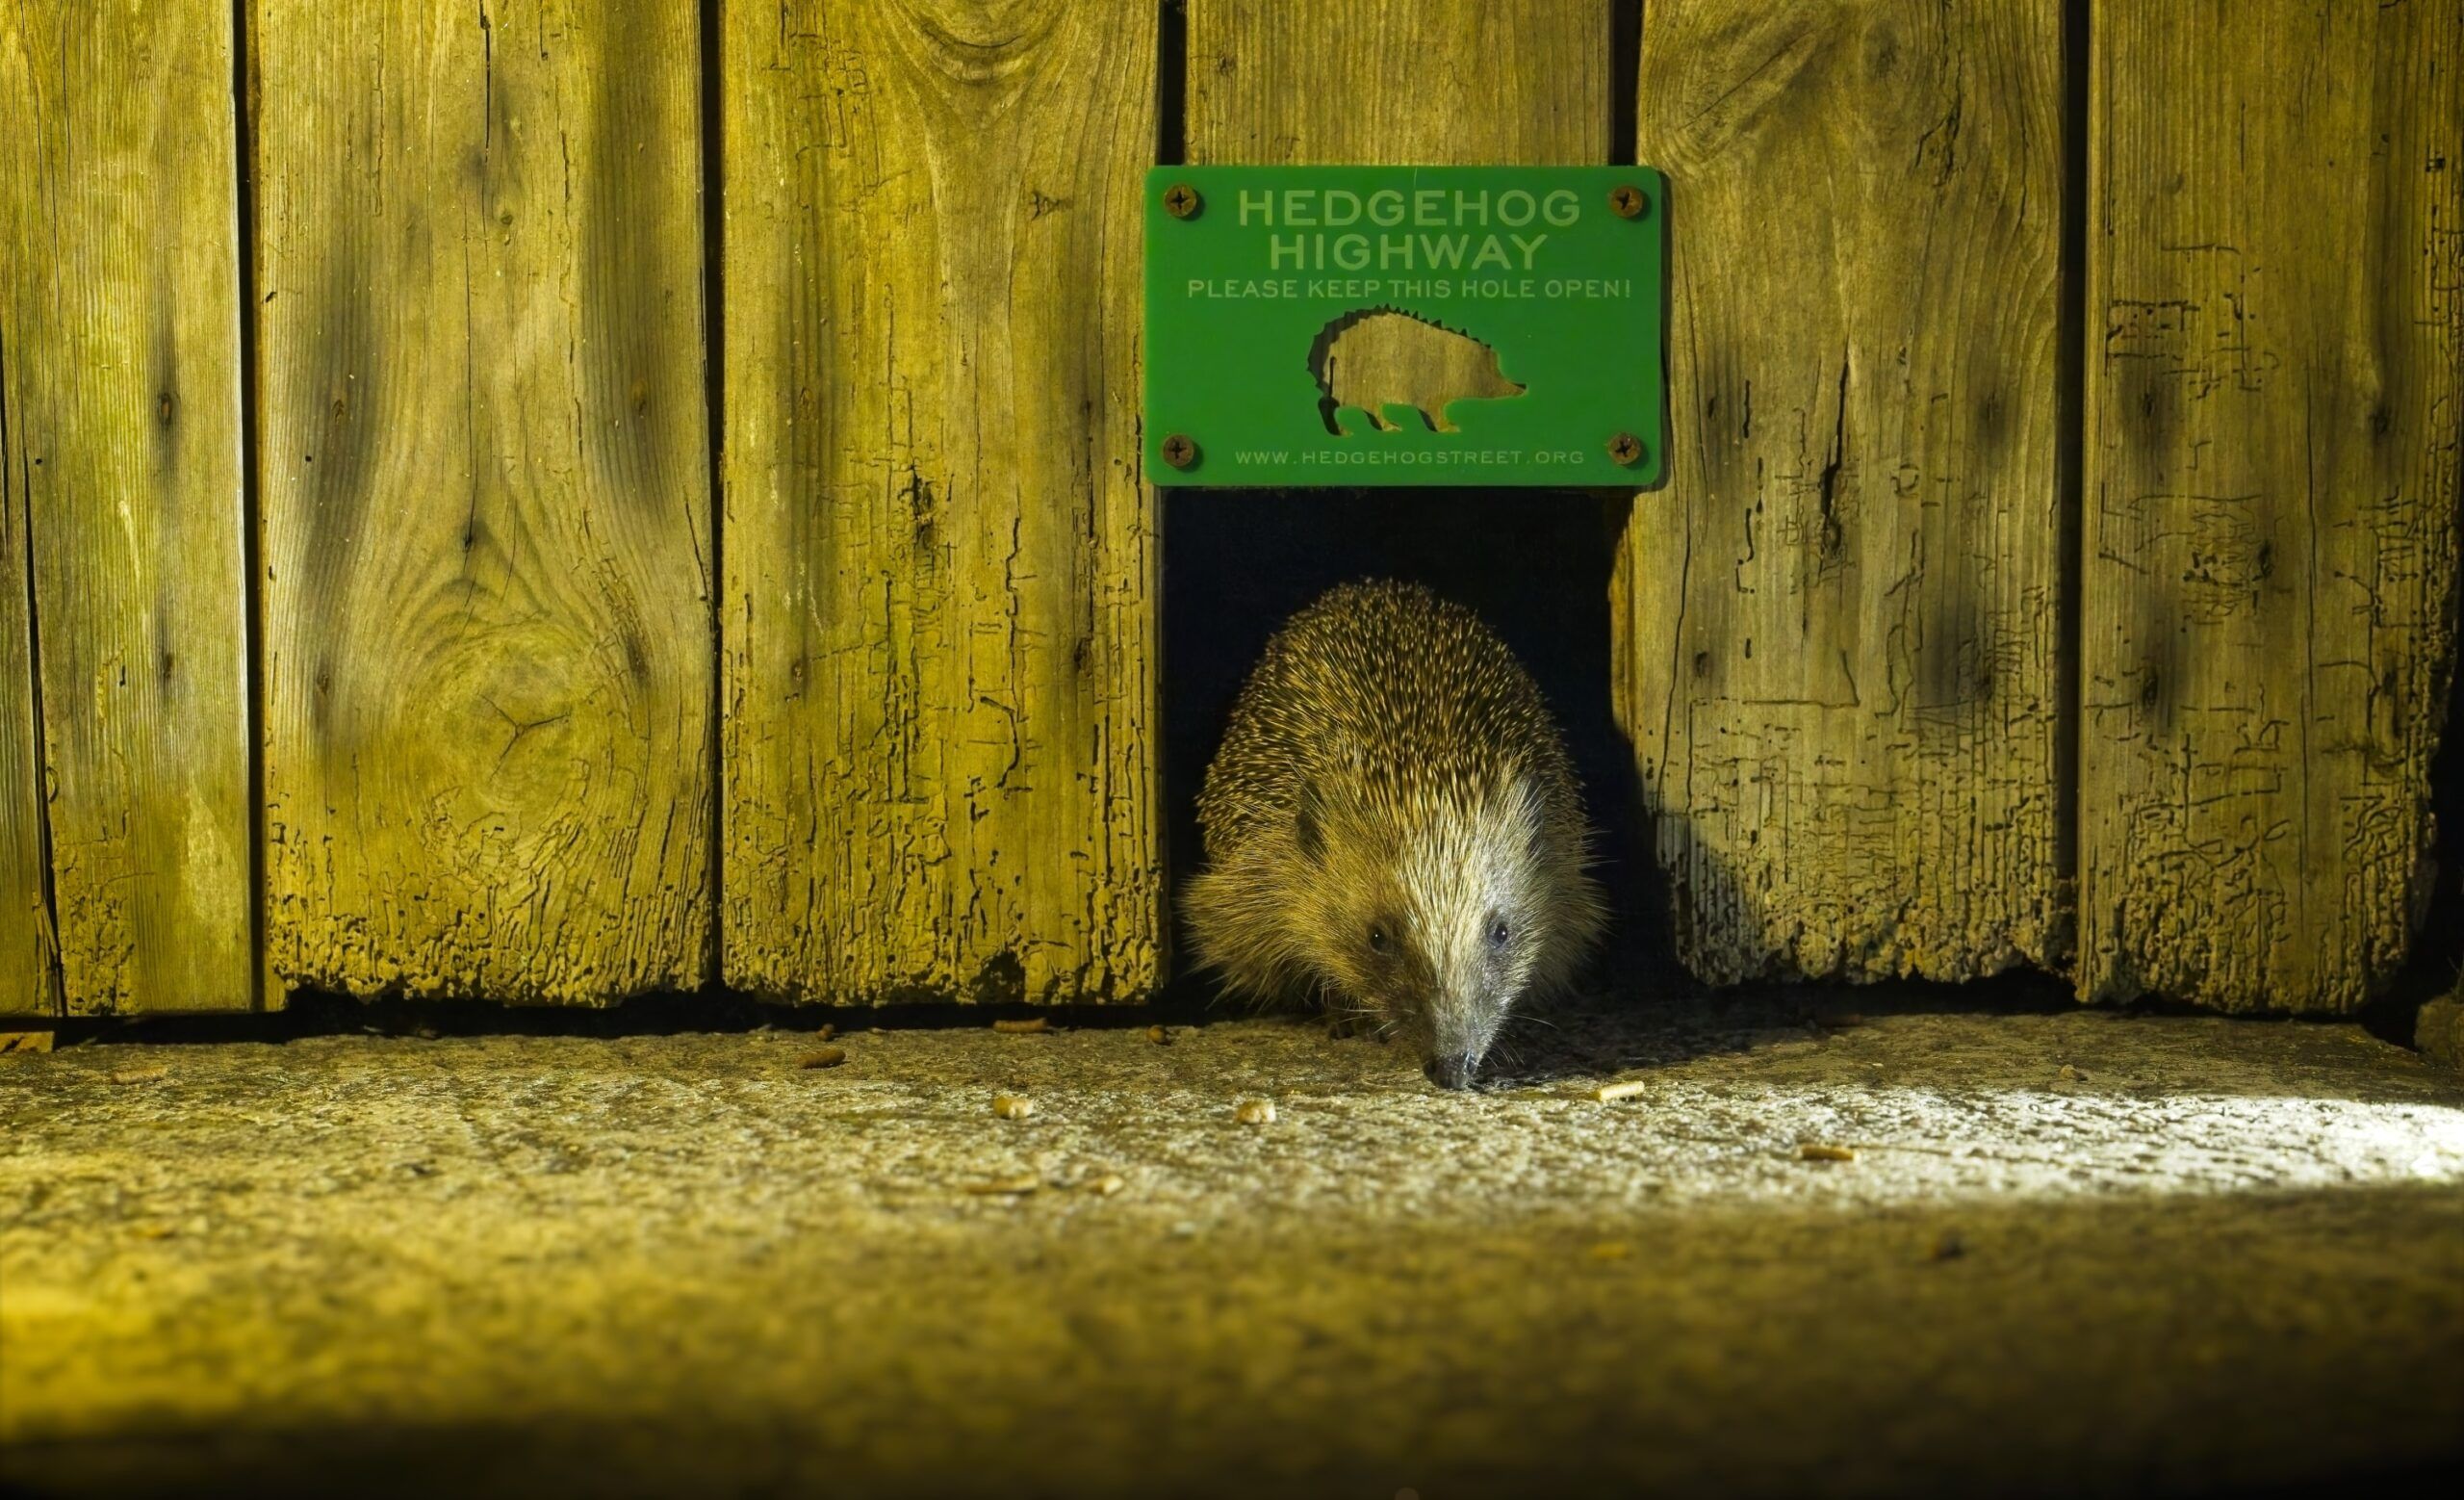 Hedgehog Highway and hedgehog by Christopher Morgan